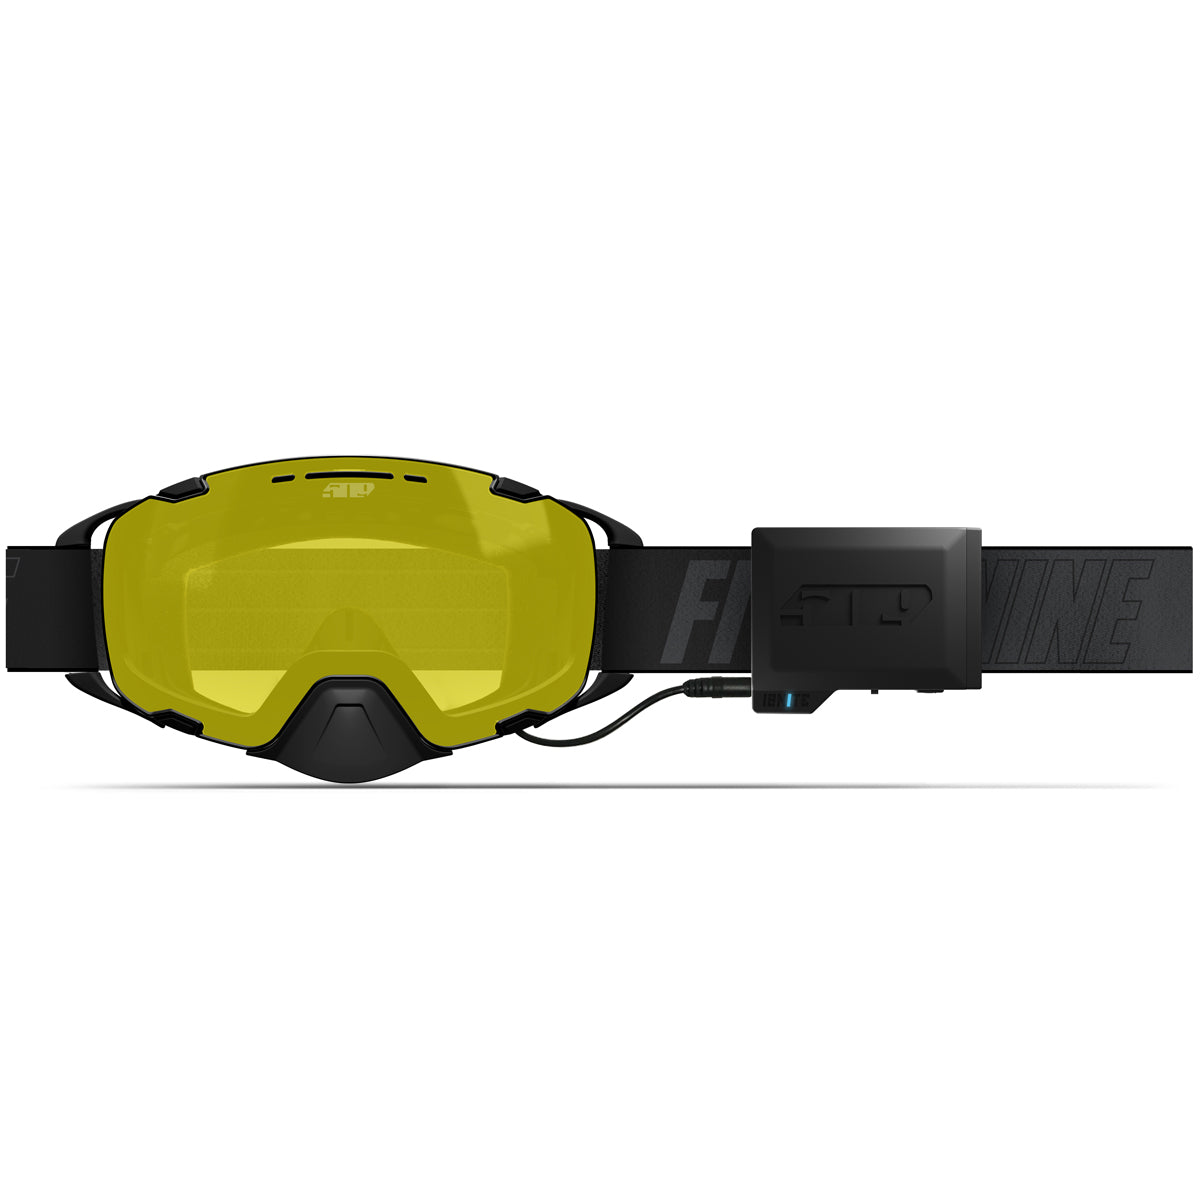 Aviator 2.0 Ignite S1 Goggle - Black with Yellow